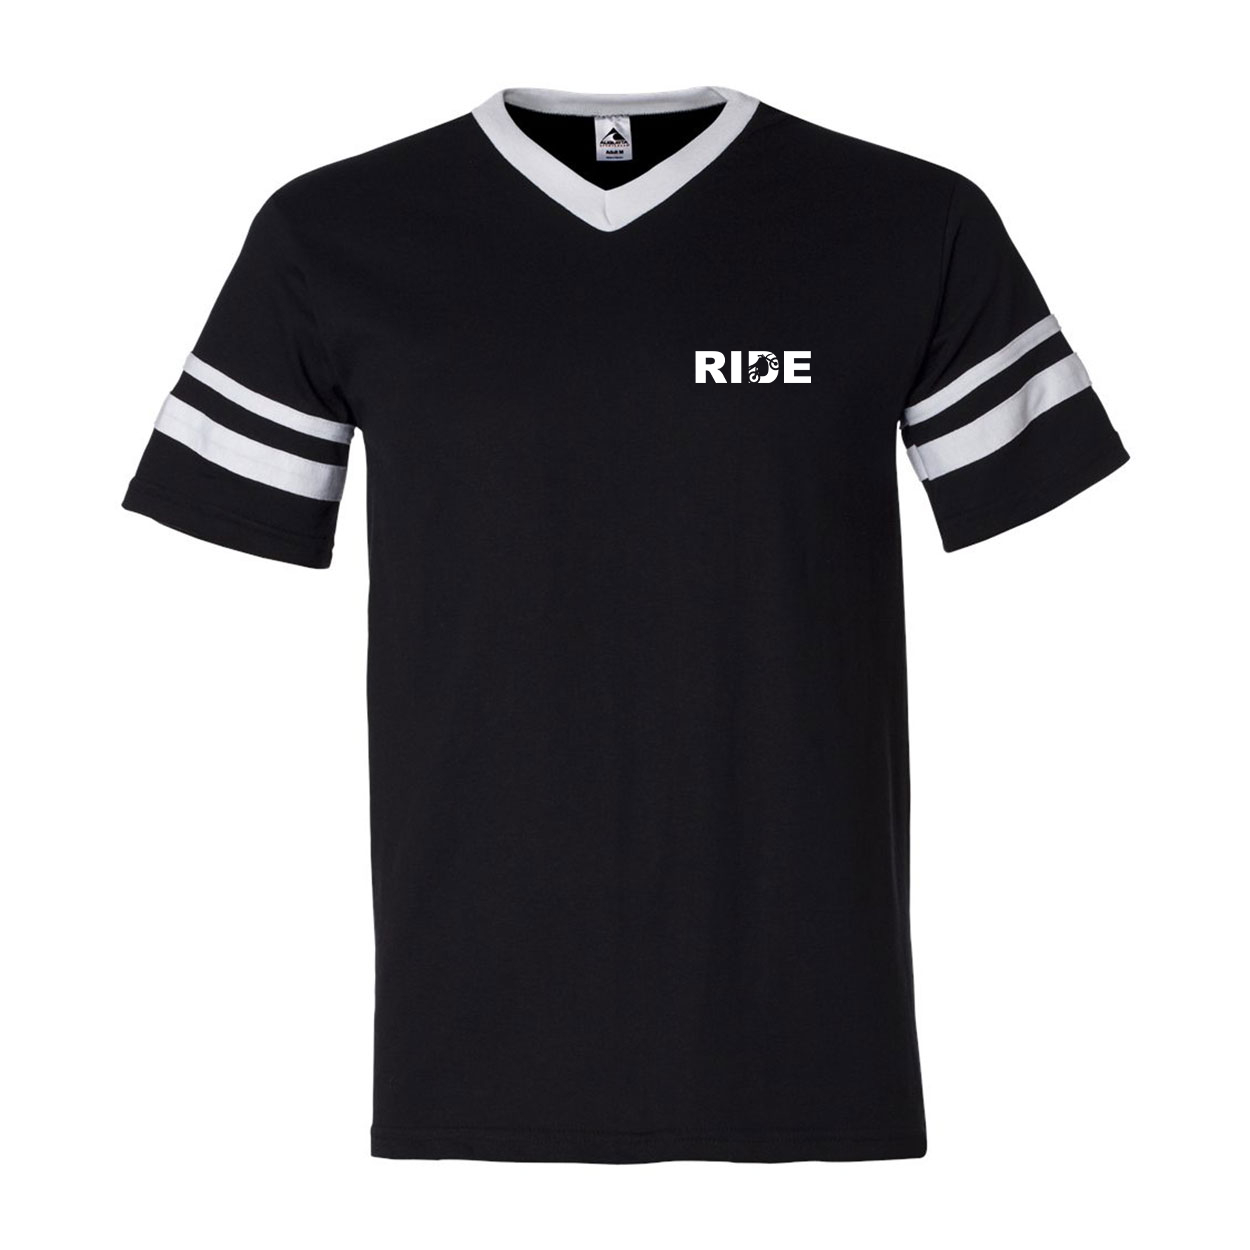 Ride Moto Logo Night Out Premium Striped Jersey T-Shirt Black/White (White Logo)